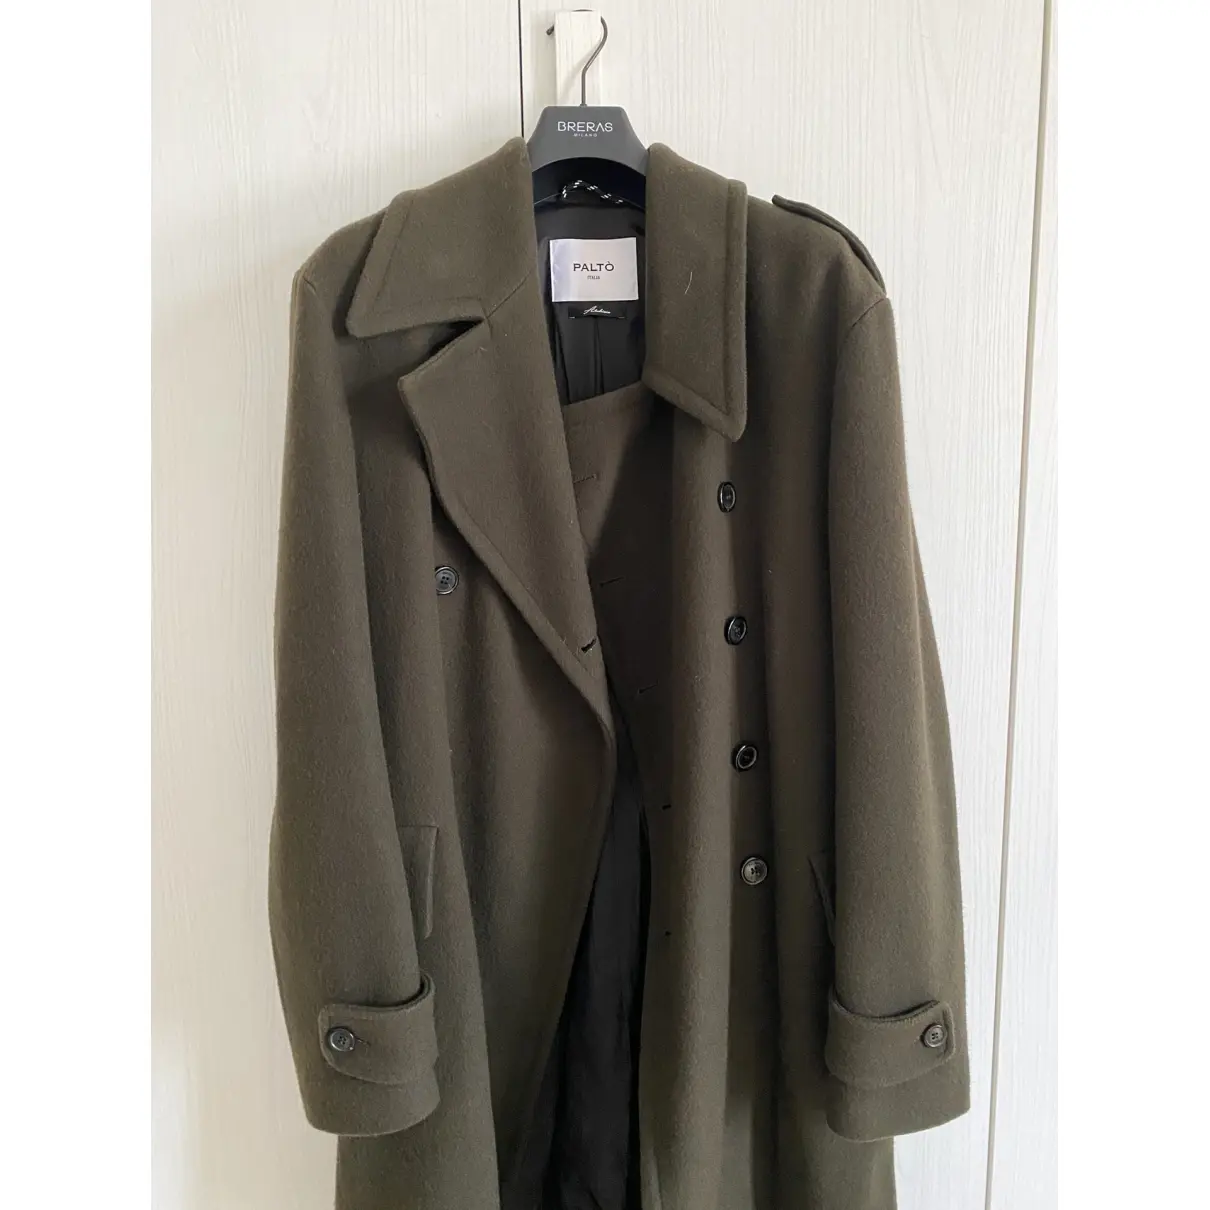 Buy Palto Wool coat online